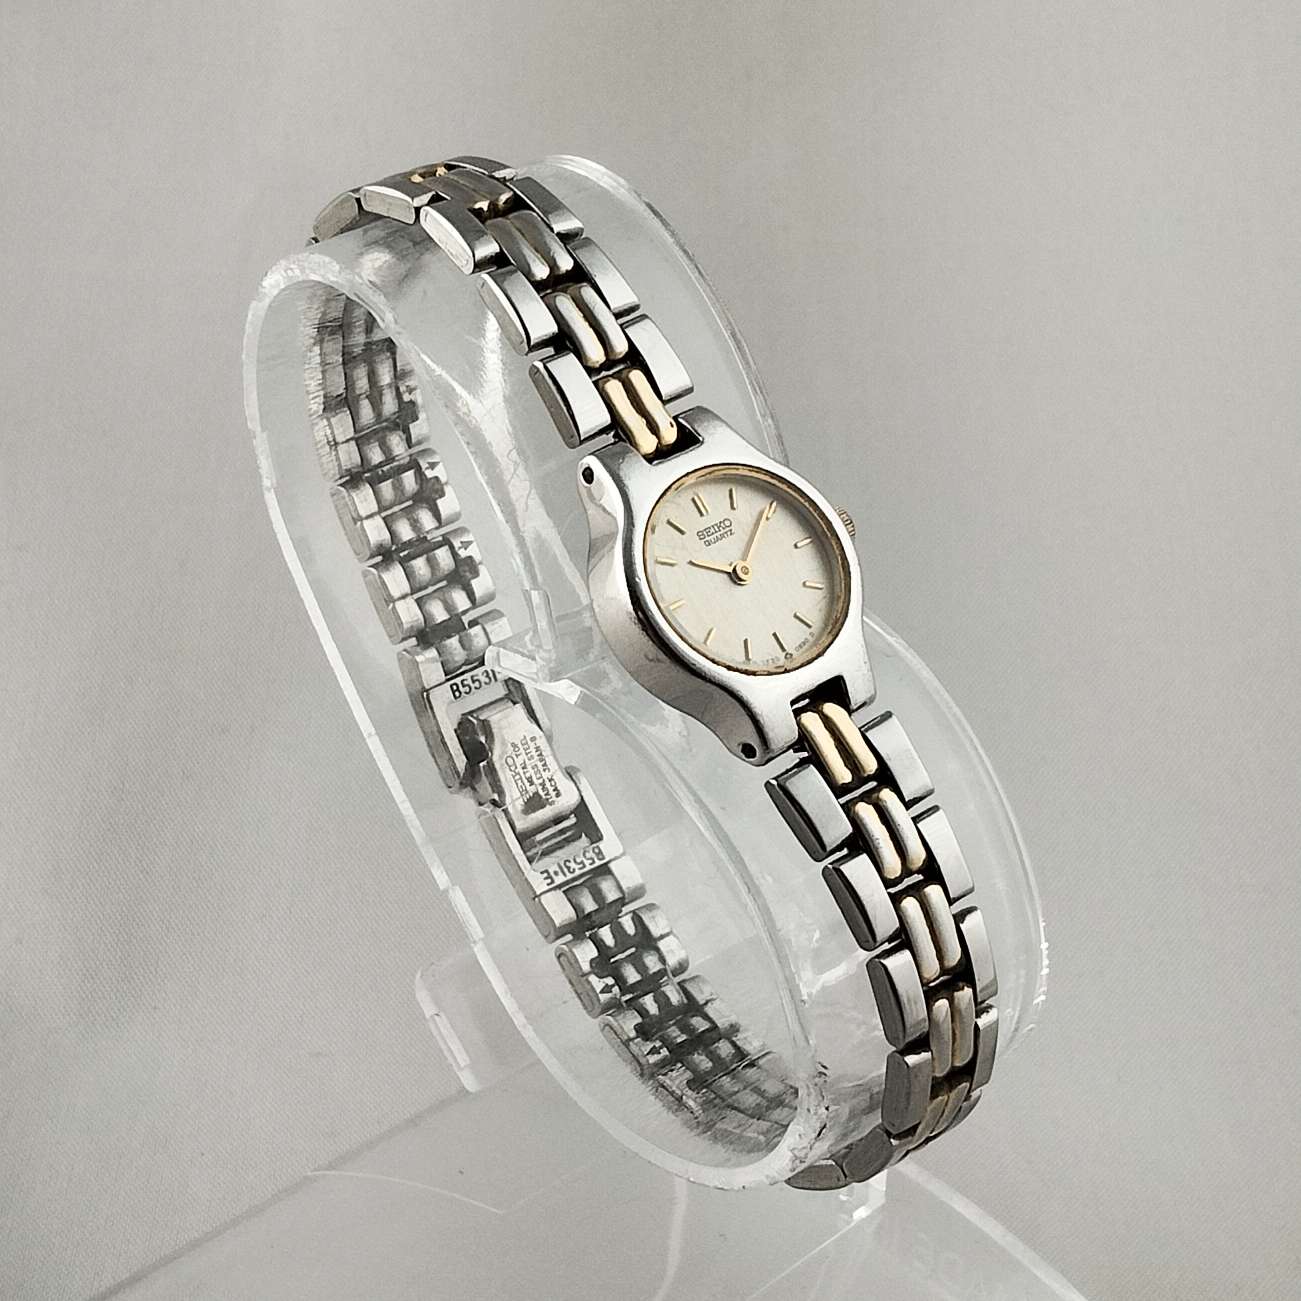 Seiko Women's Petite Watch, Silver and Gold Tone, Bracelet Strap